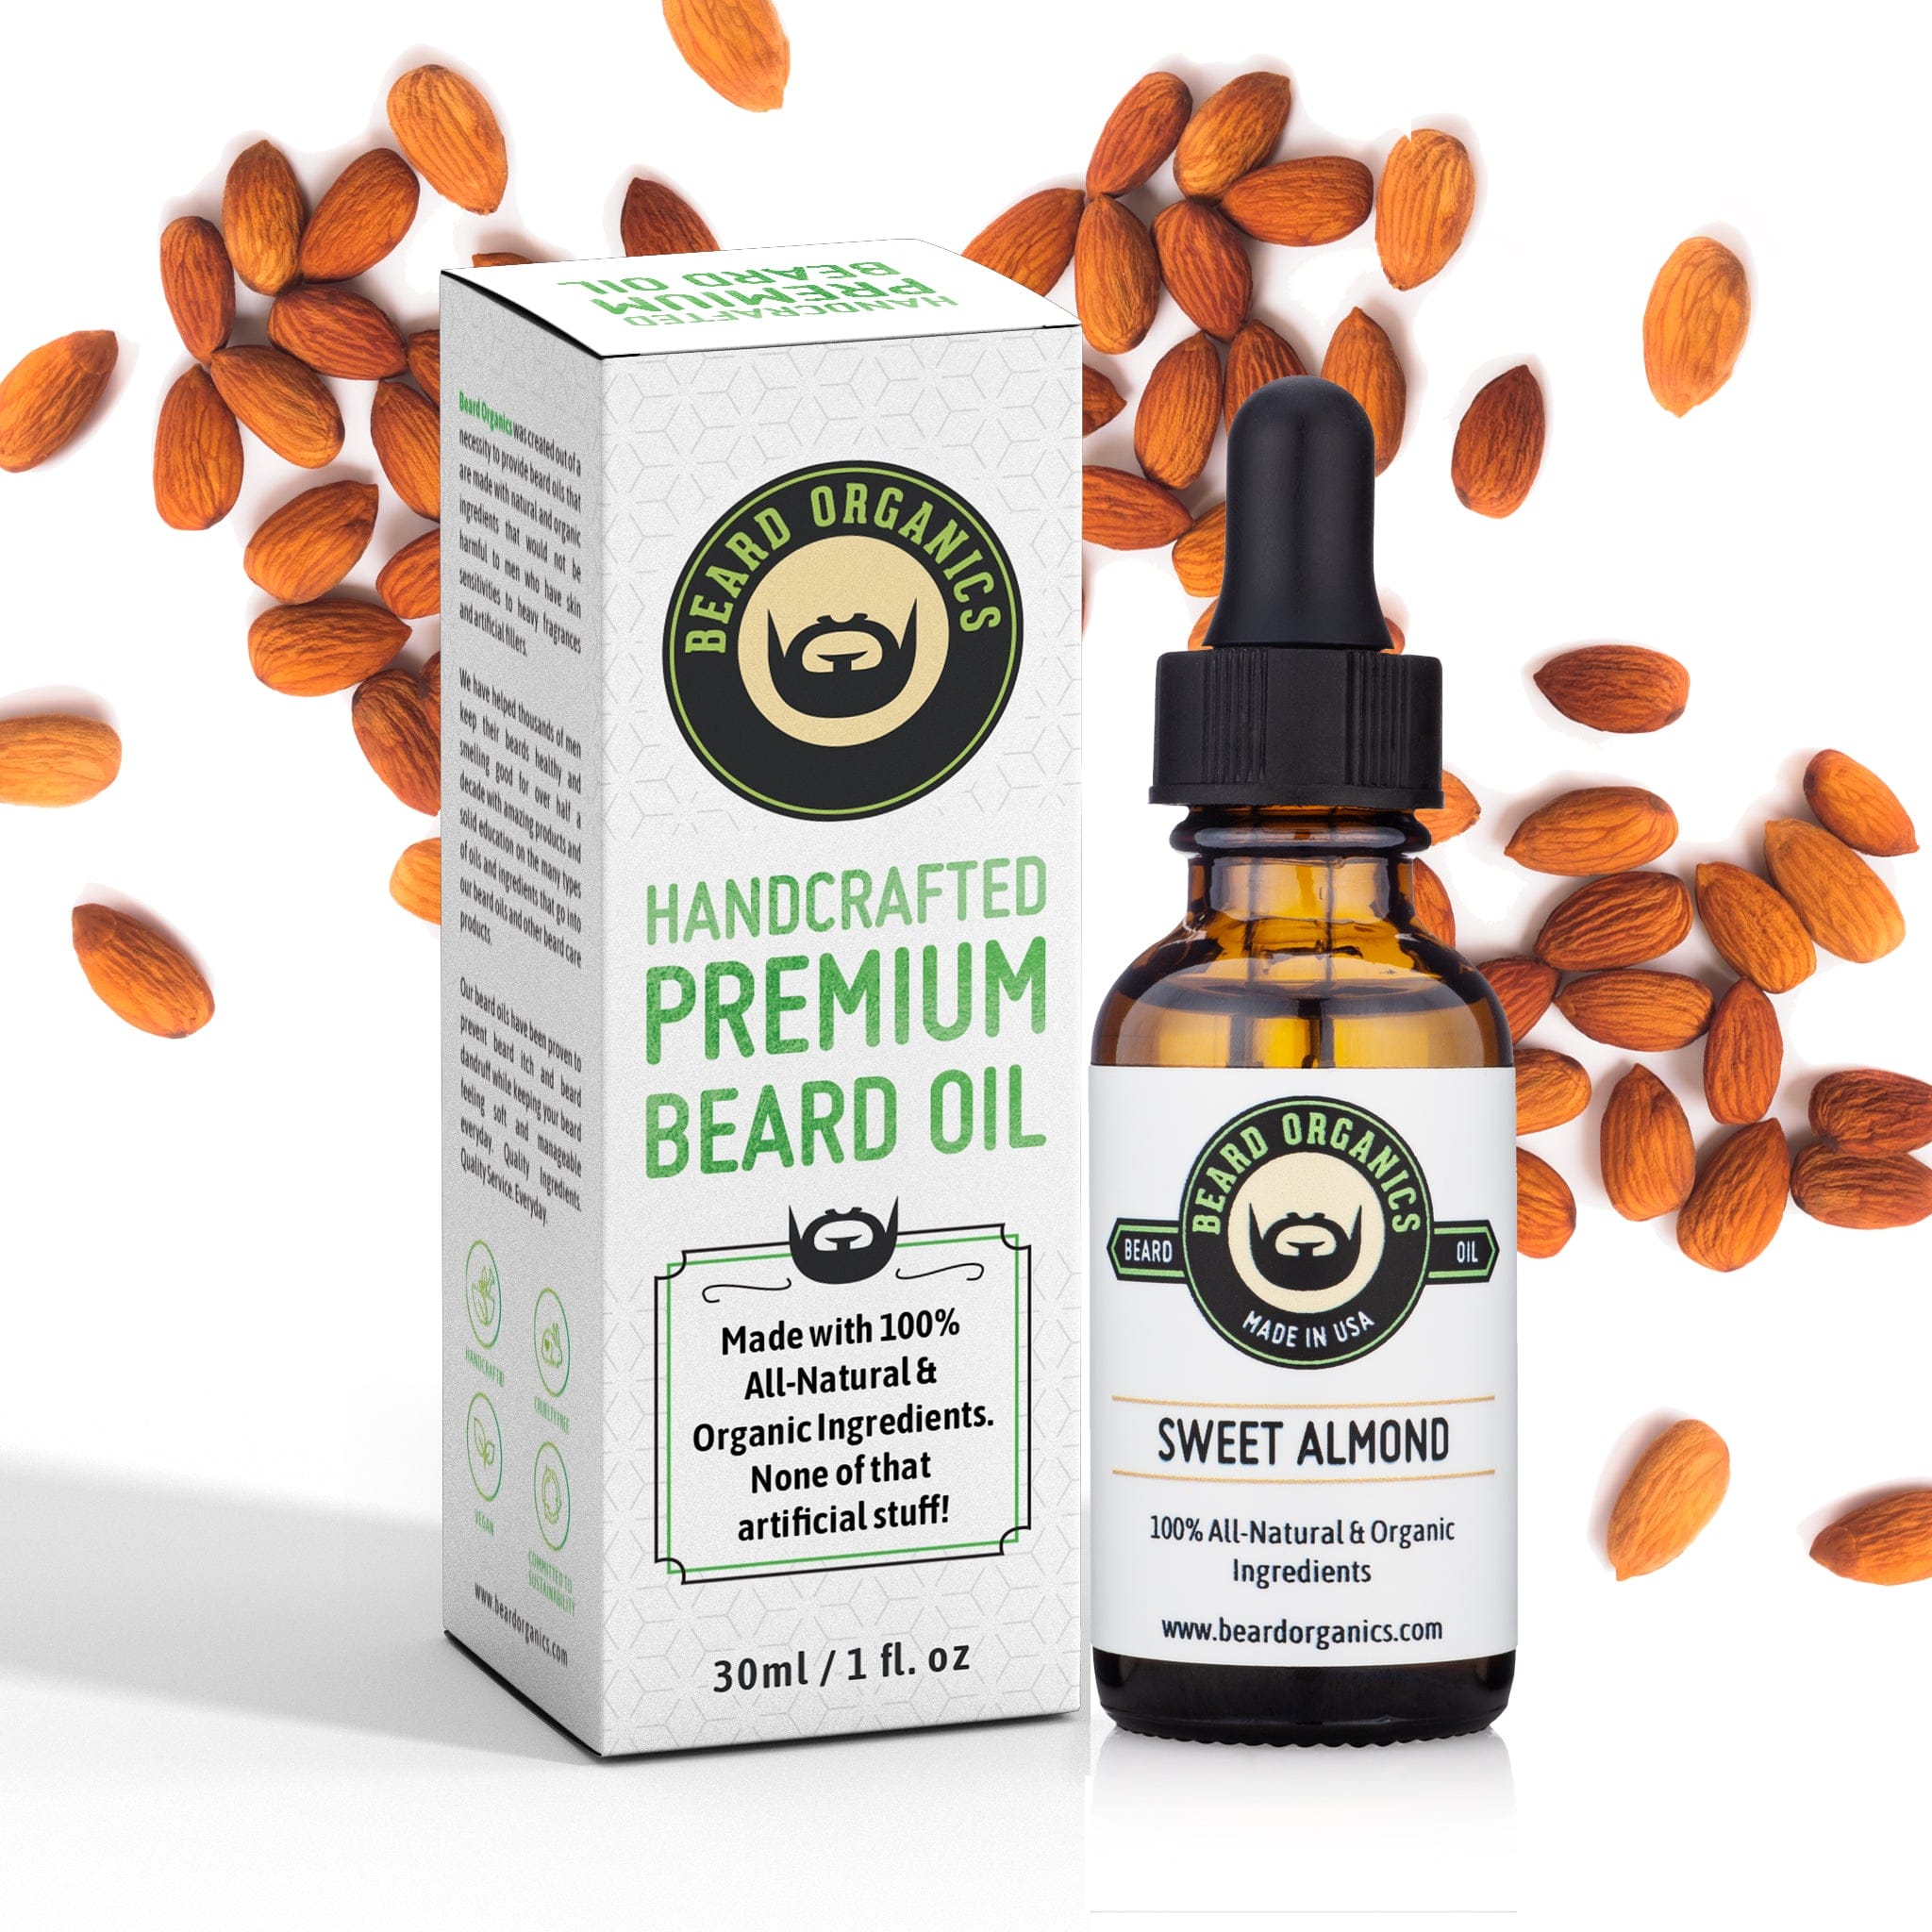 Sweet Almond Beard Oil - Fragrance-Free by Beard Organics